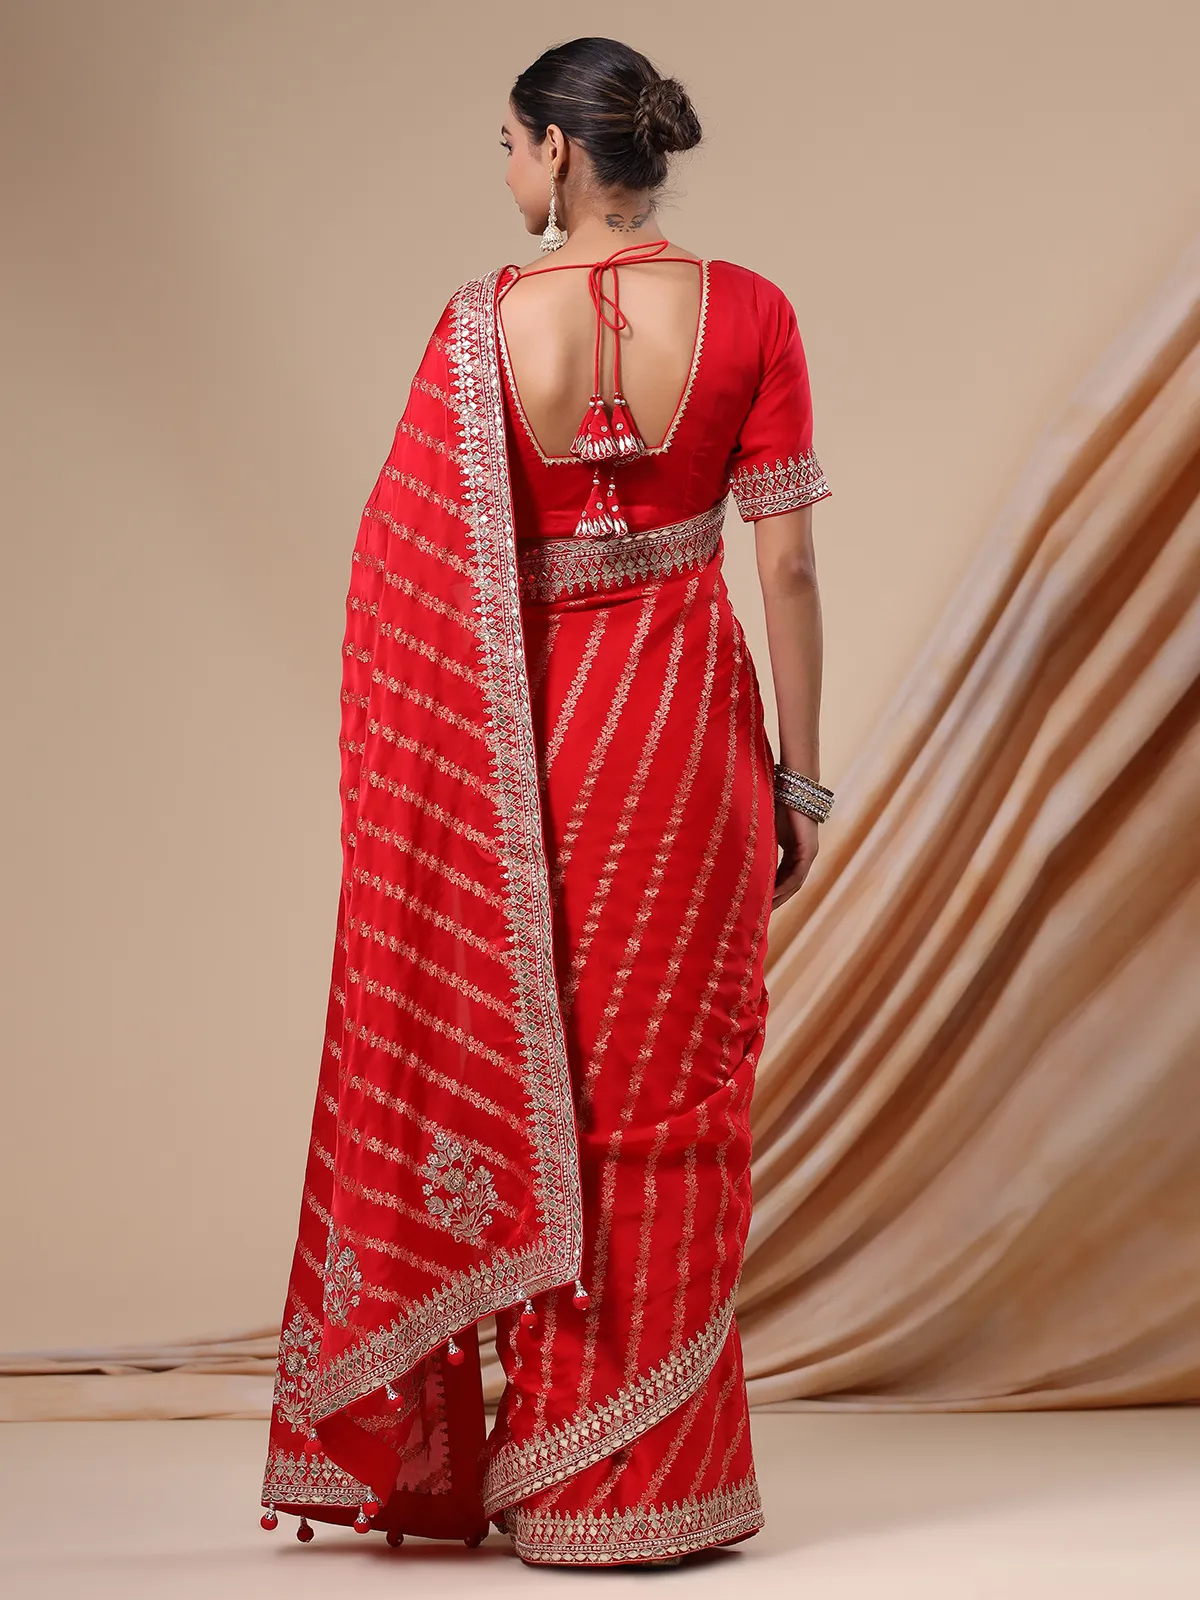 Stunning red silk saree